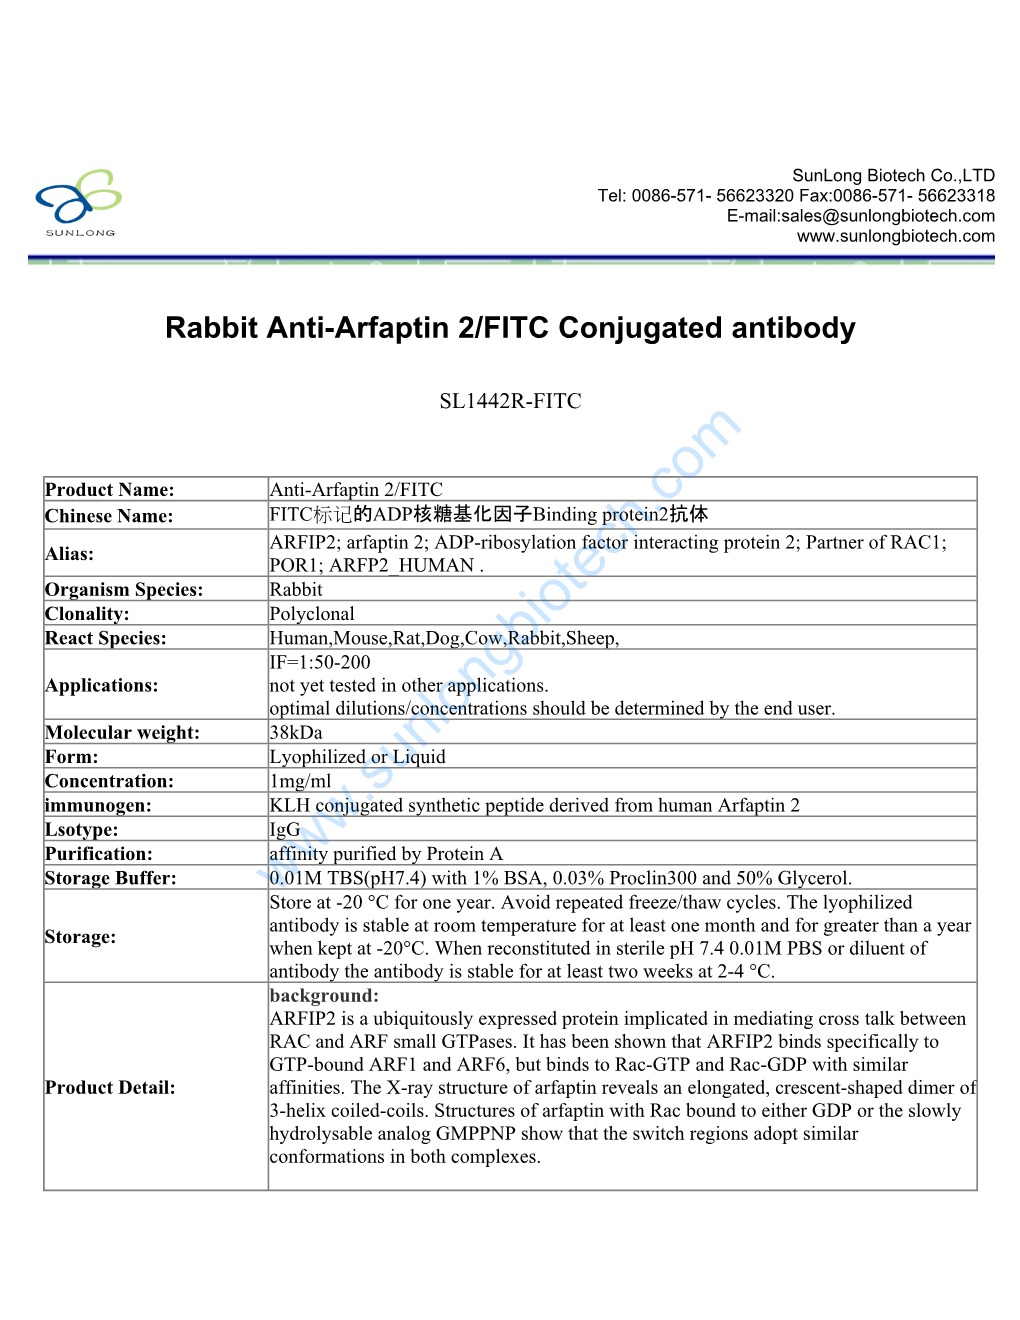 Rabbit Anti-Arfaptin 2/FITC Conjugated Antibody